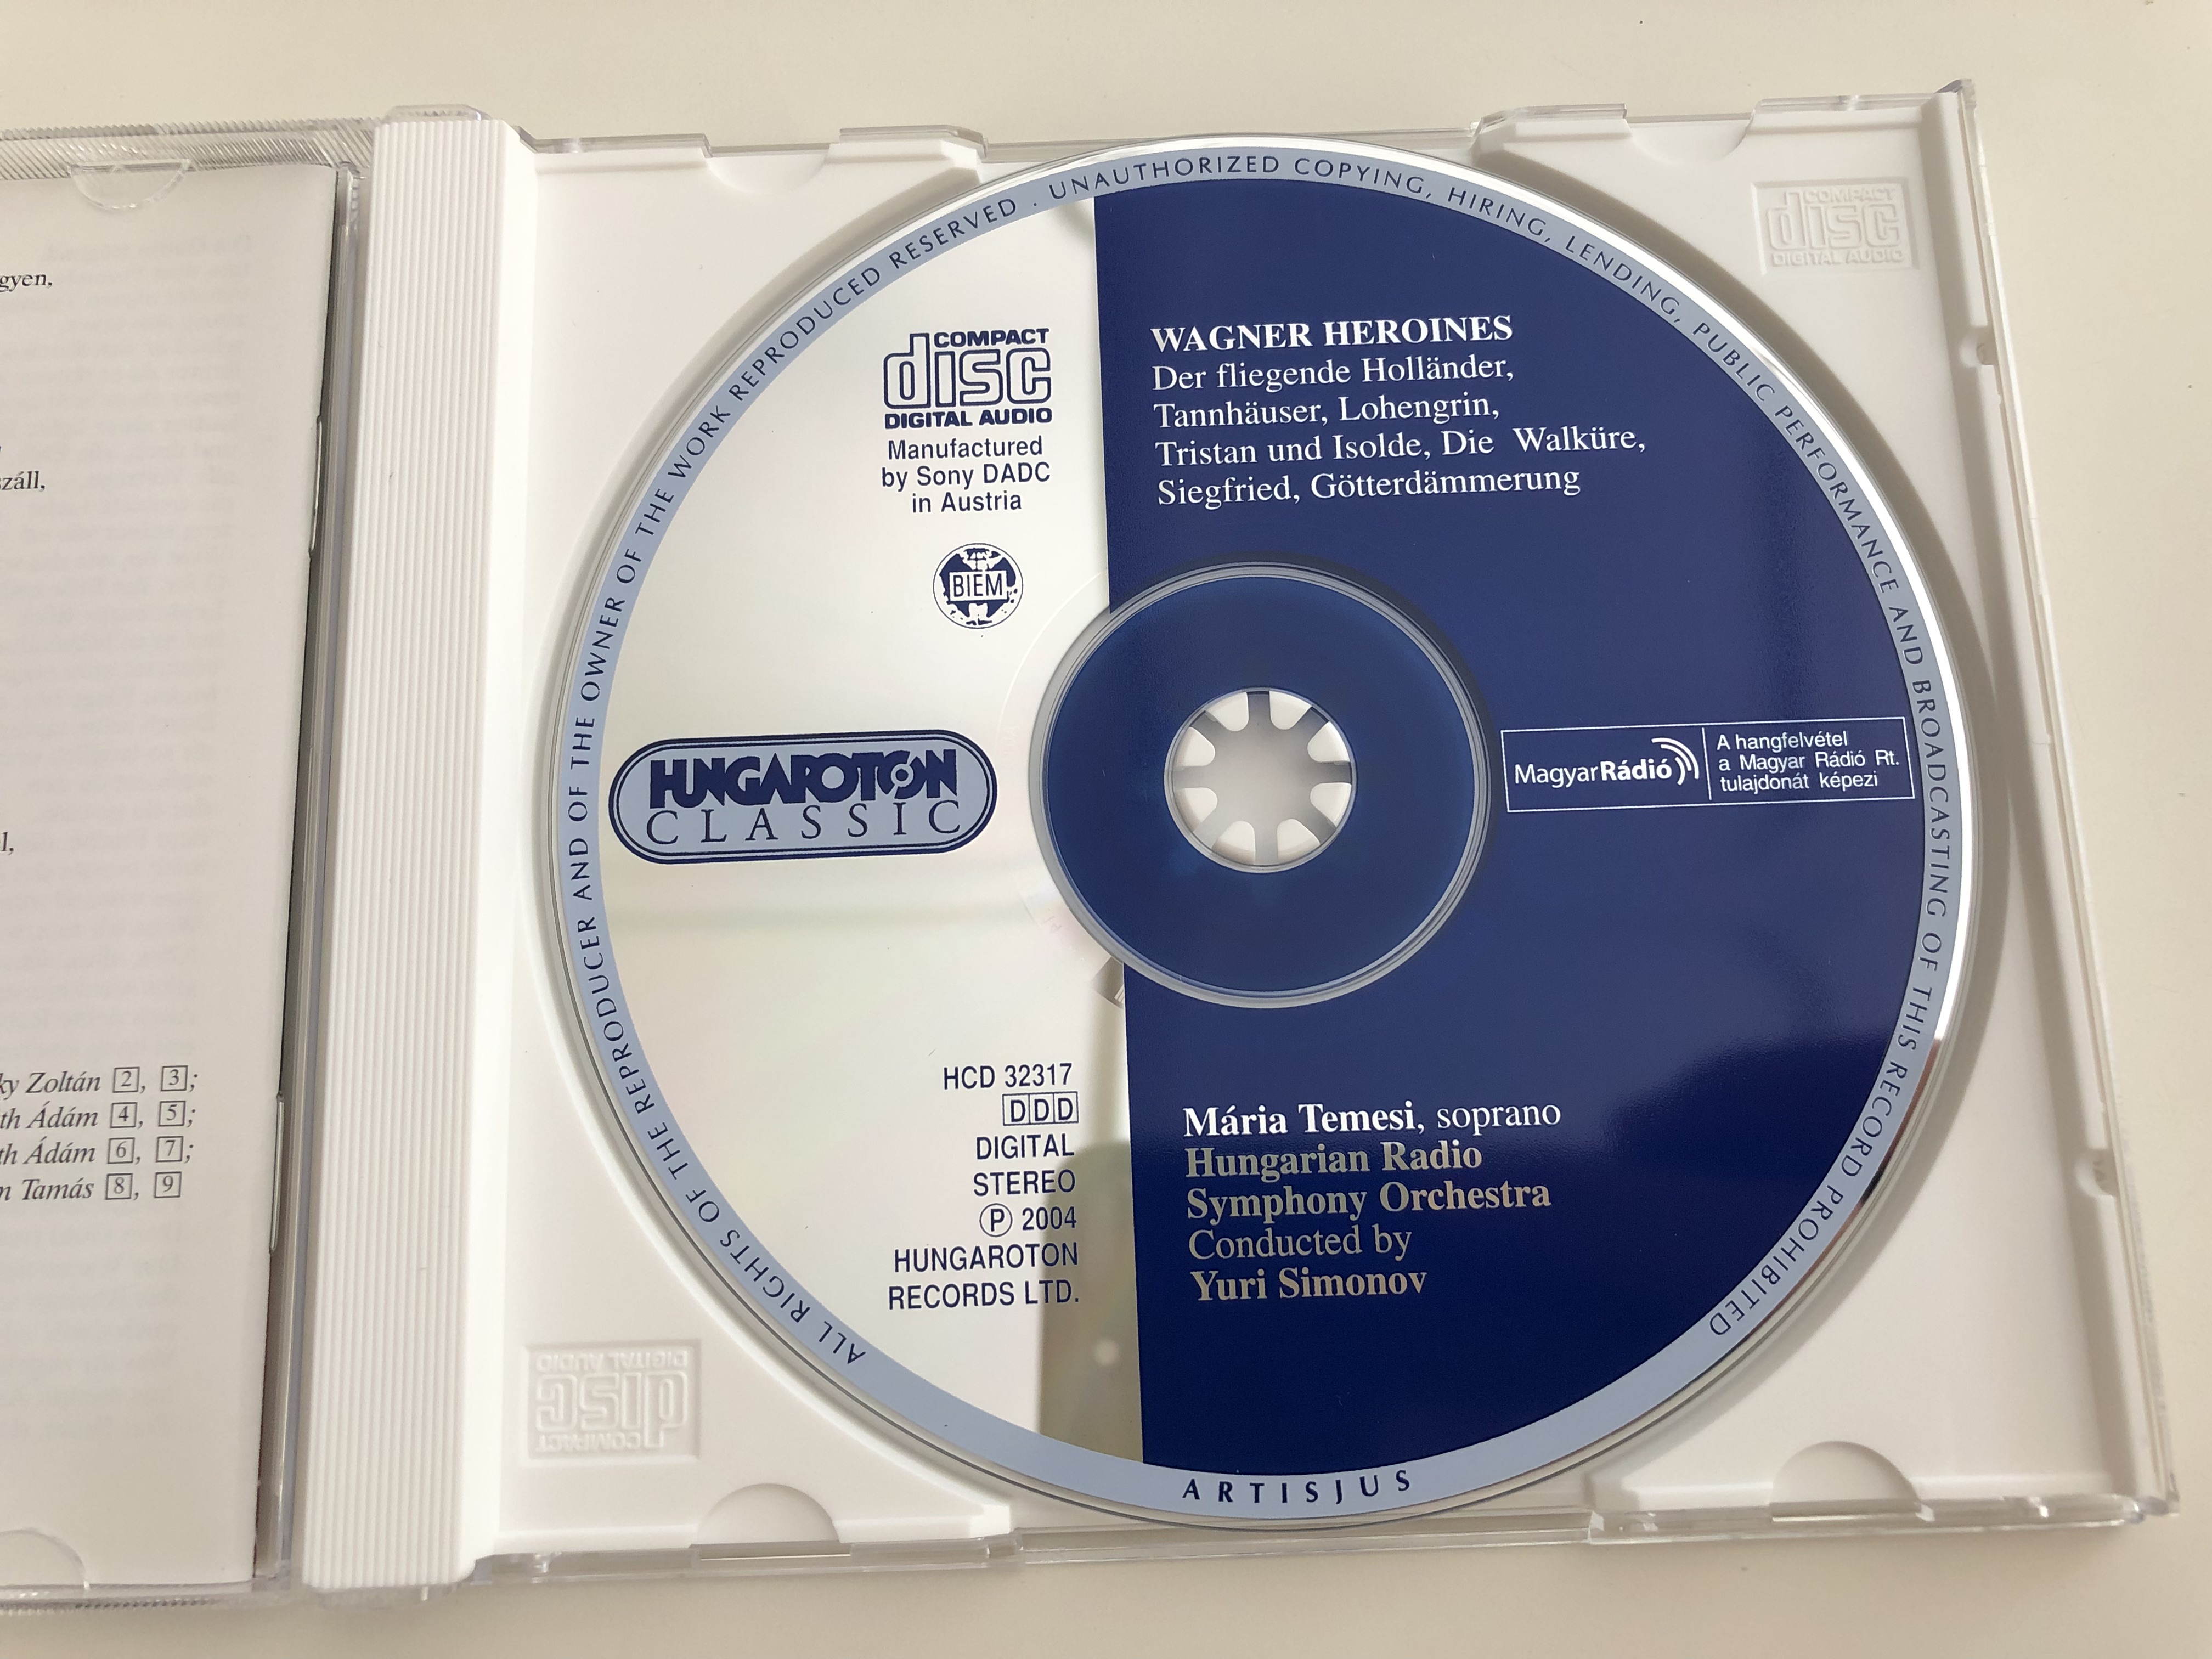 Wagner Heroines - Mária Temesi / Hungarian Radio Symphony Orchestra /  Conducted by Yuri Simonov / Hungaroton Classic Audio CD 2004 / HCD 32317 -  bibleinmylanguage